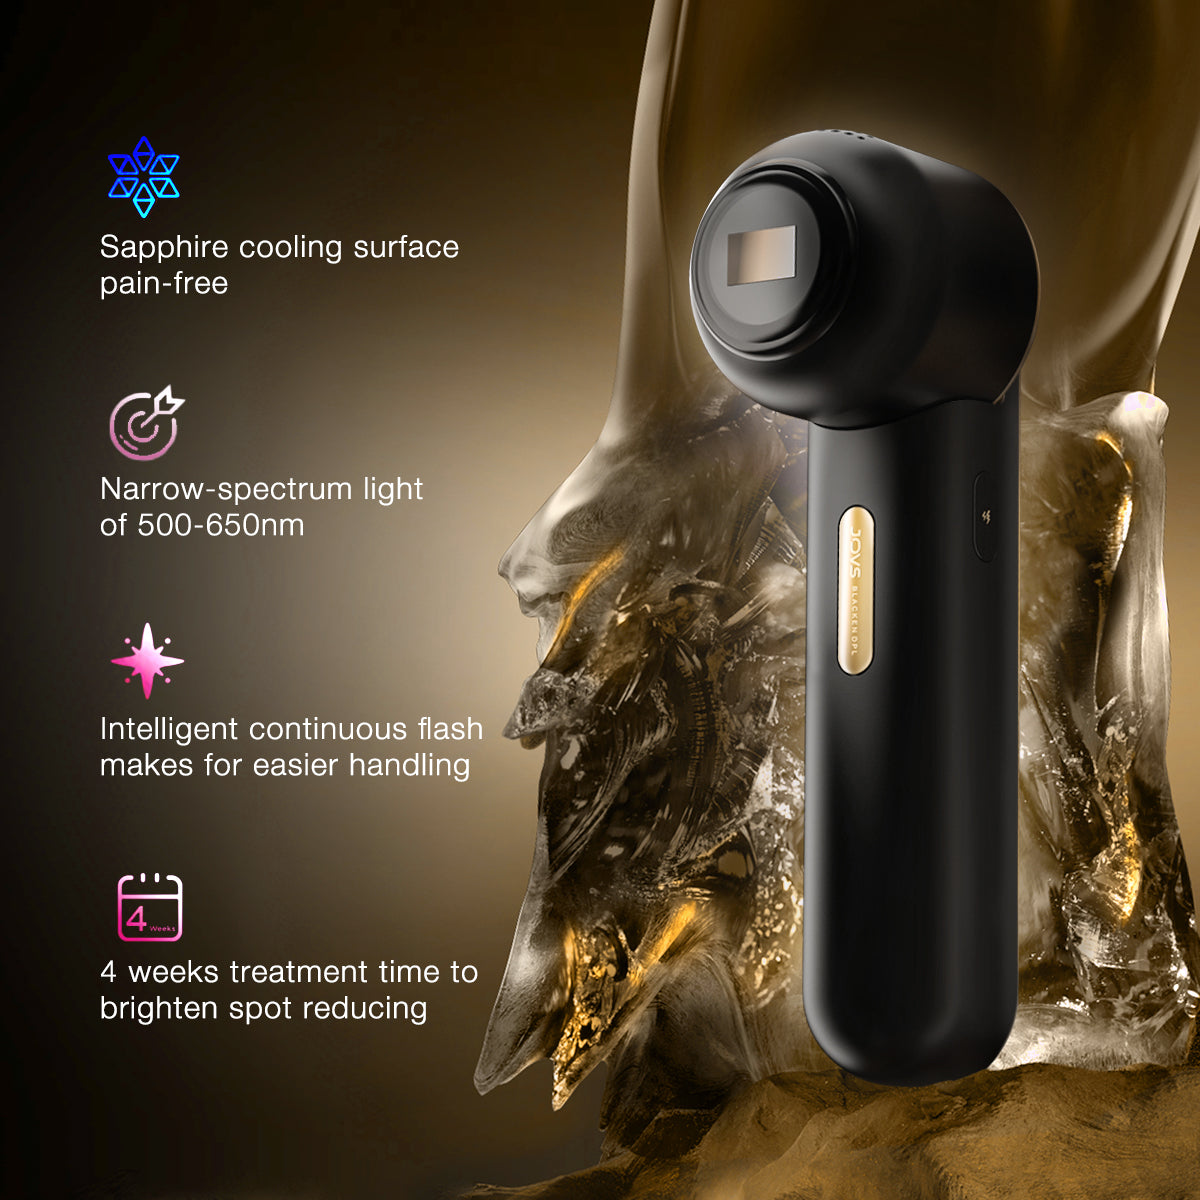 JOVS Blacken DPL Photofacial skincare device highlights its sapphire cooling surface and narrow-spectrum light technology